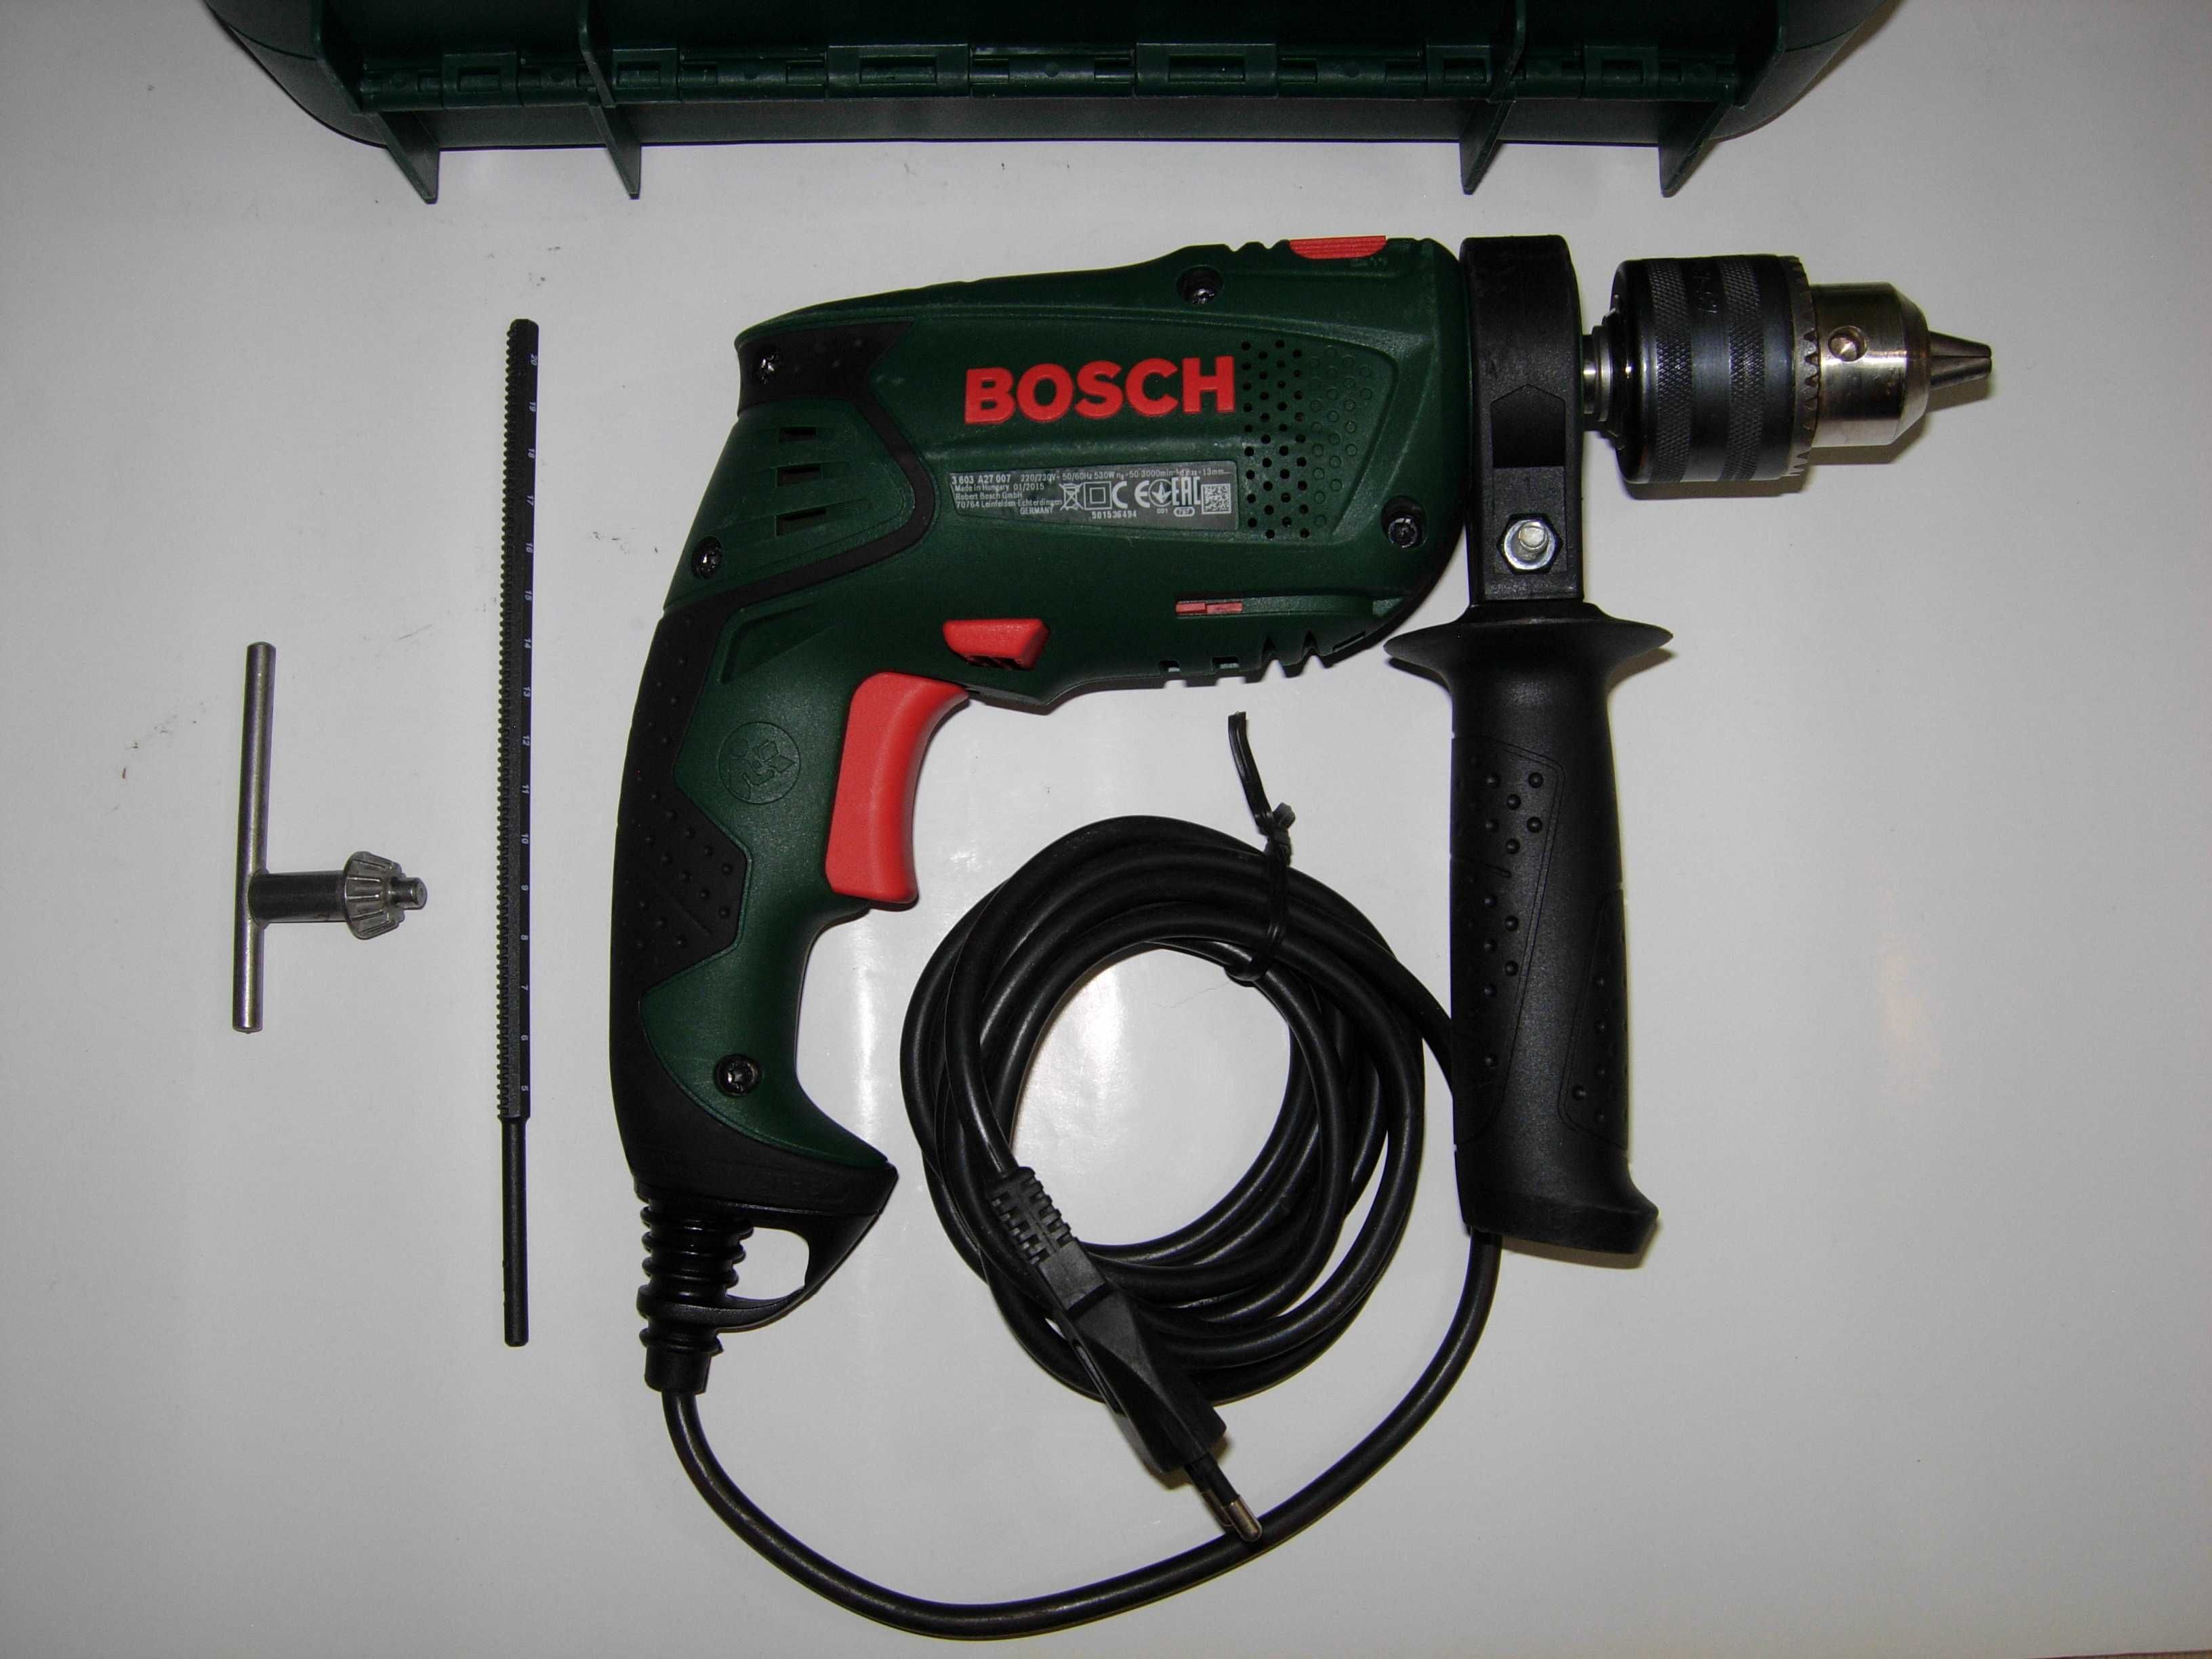 Дрель ударная Bosch PSB 530 RE в чемодане